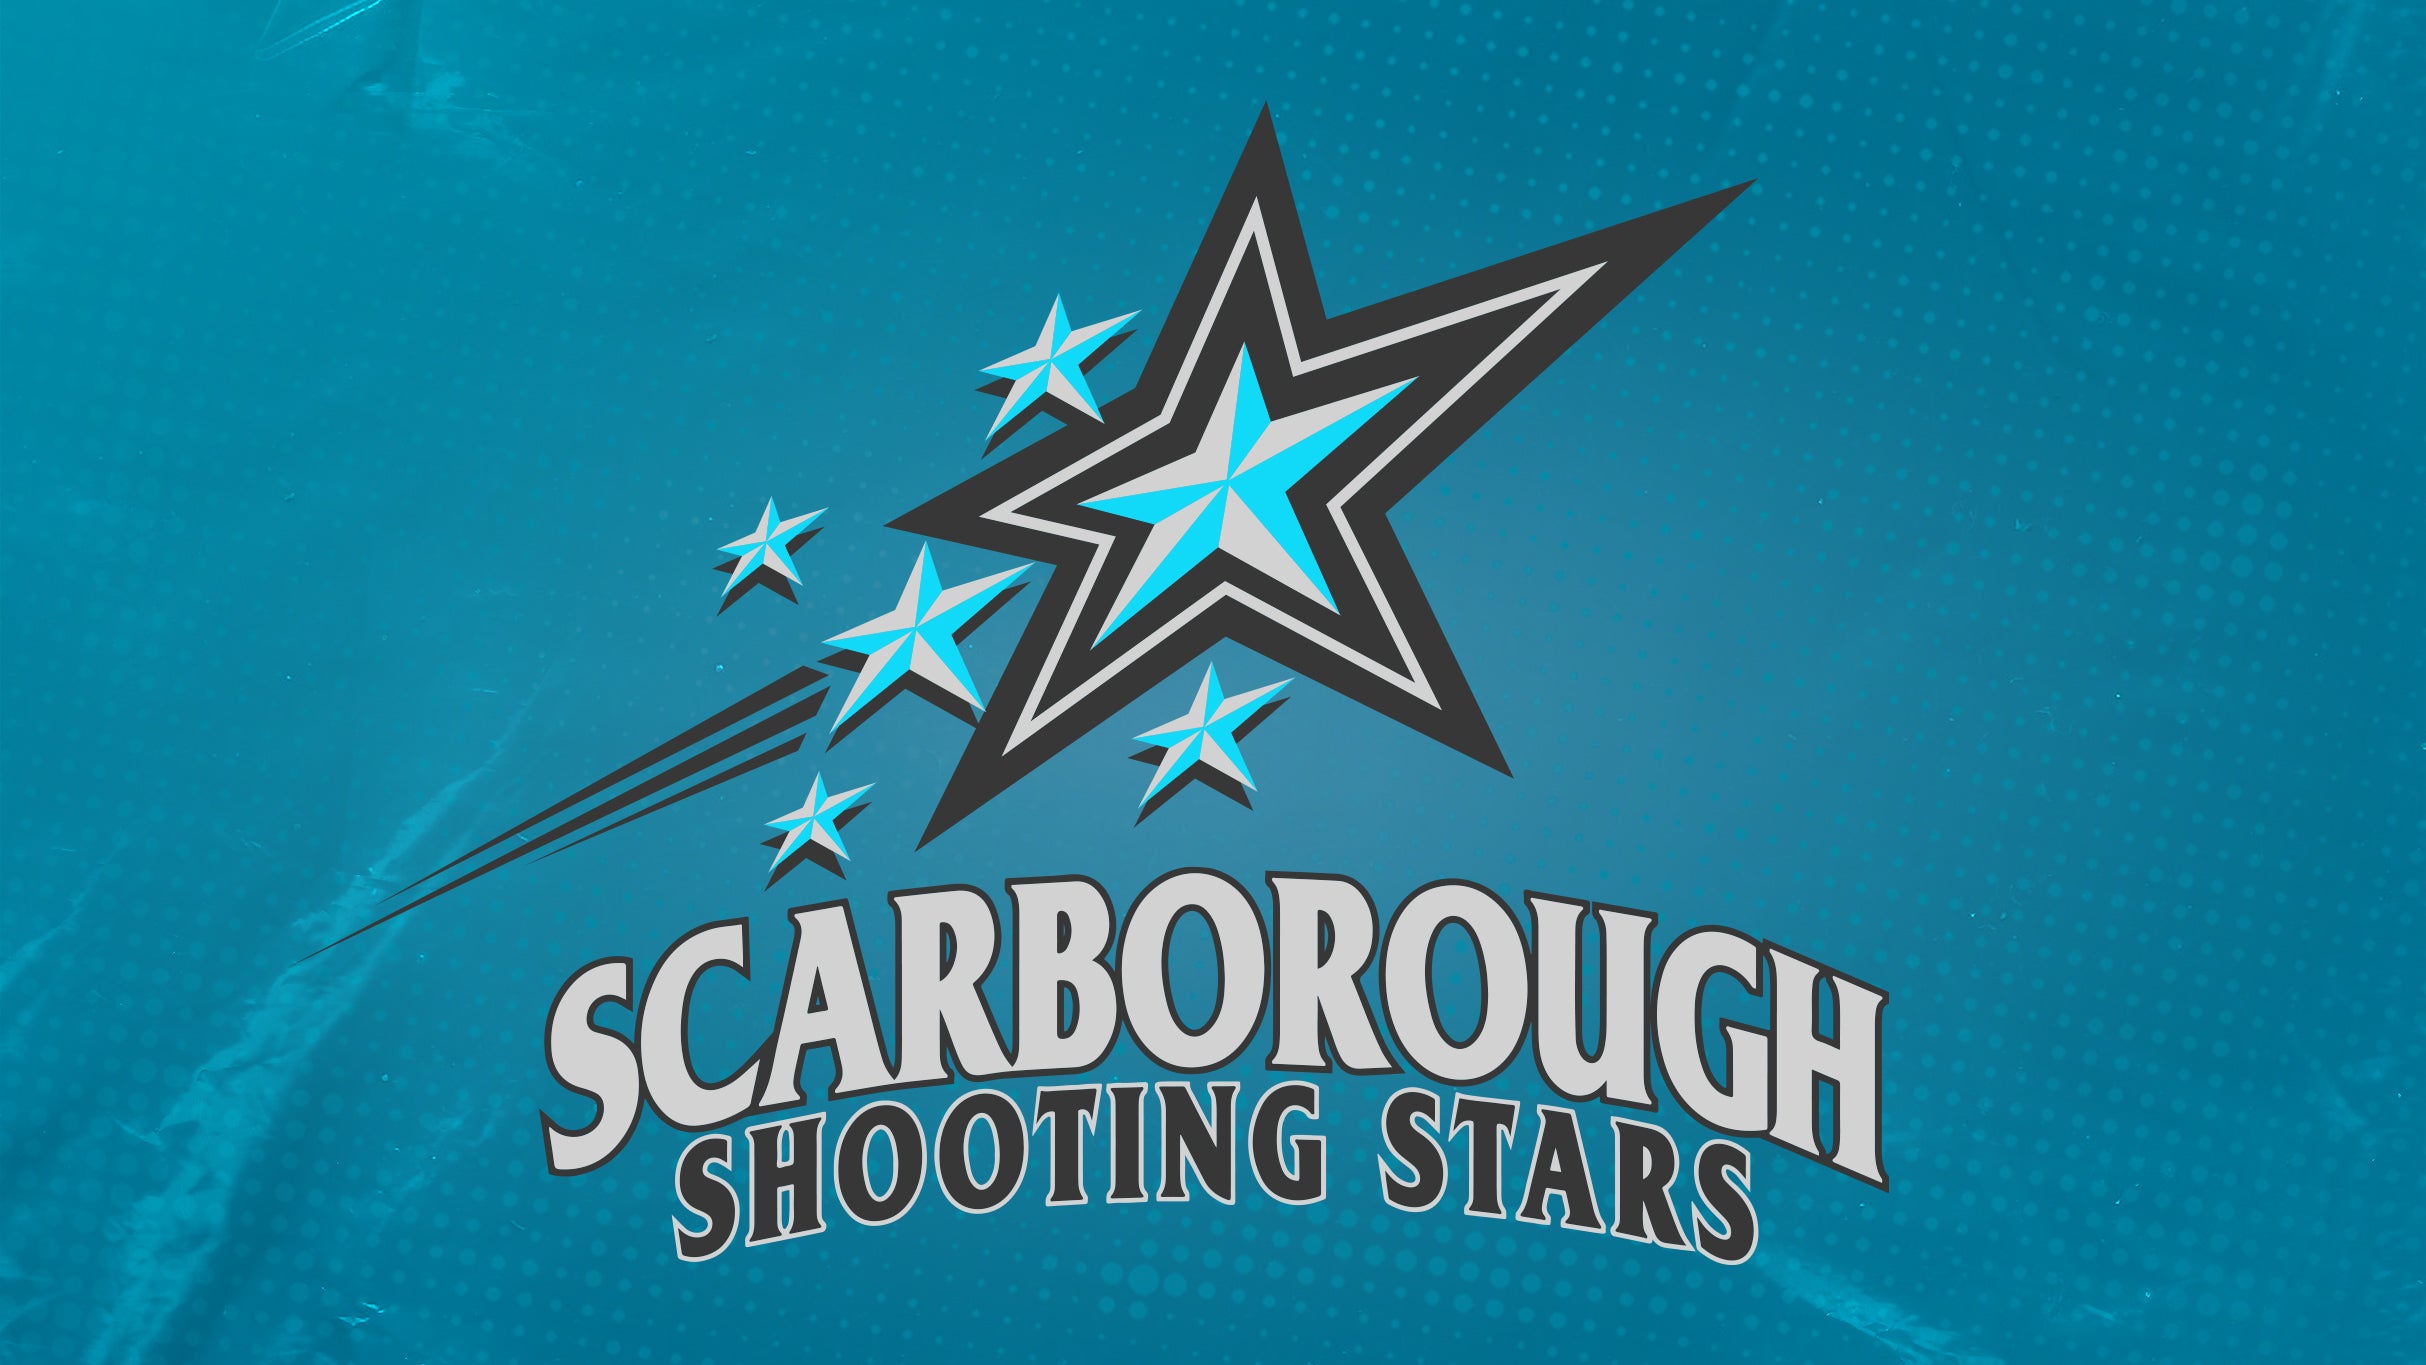 Scarborough Shooting Stars vs. Niagara River Lions presales in Toronto